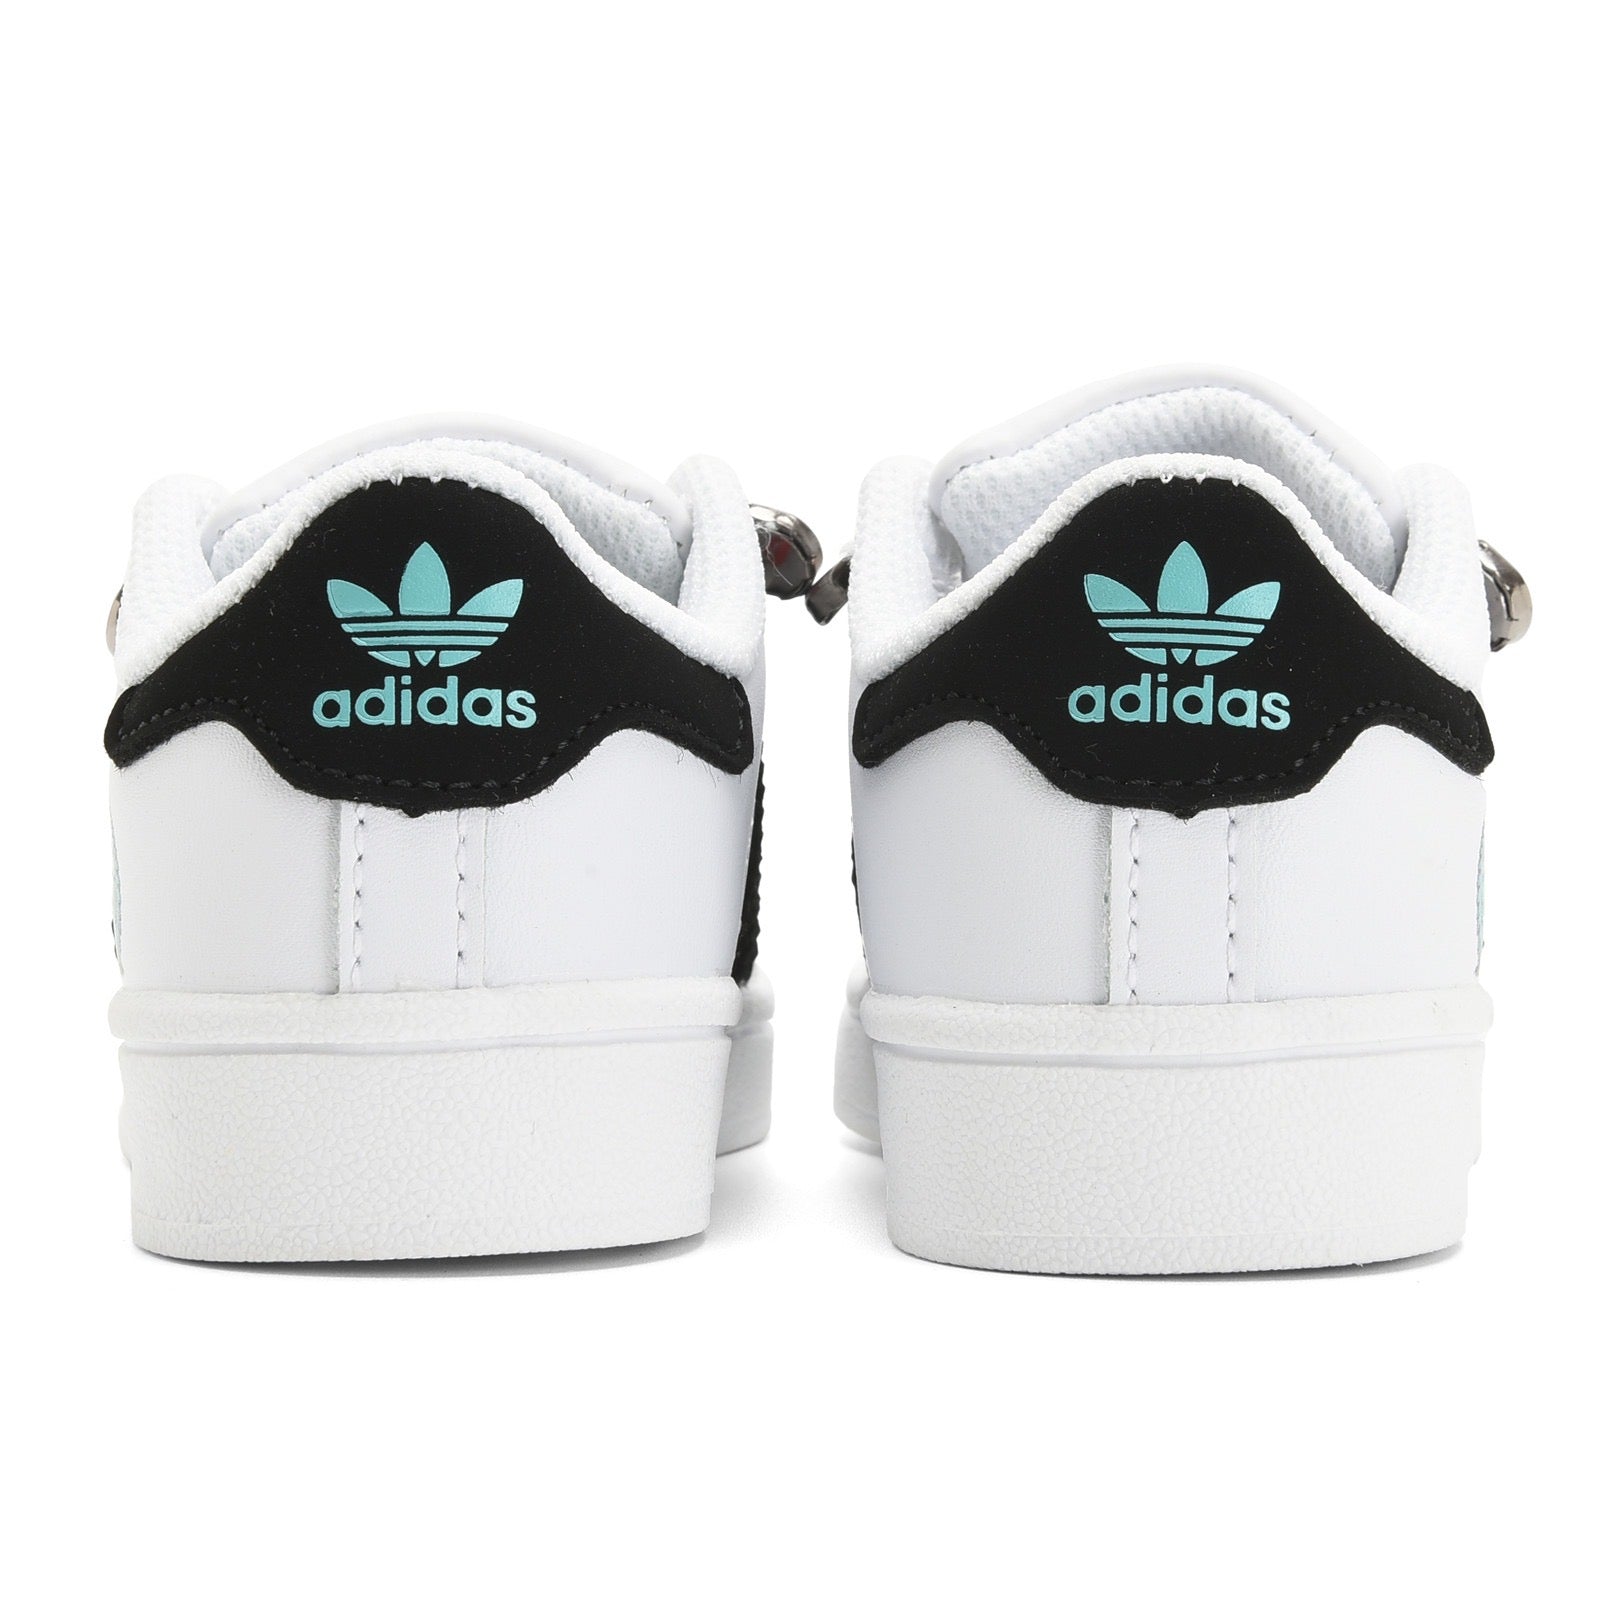 Adidas superstar white/black shoes